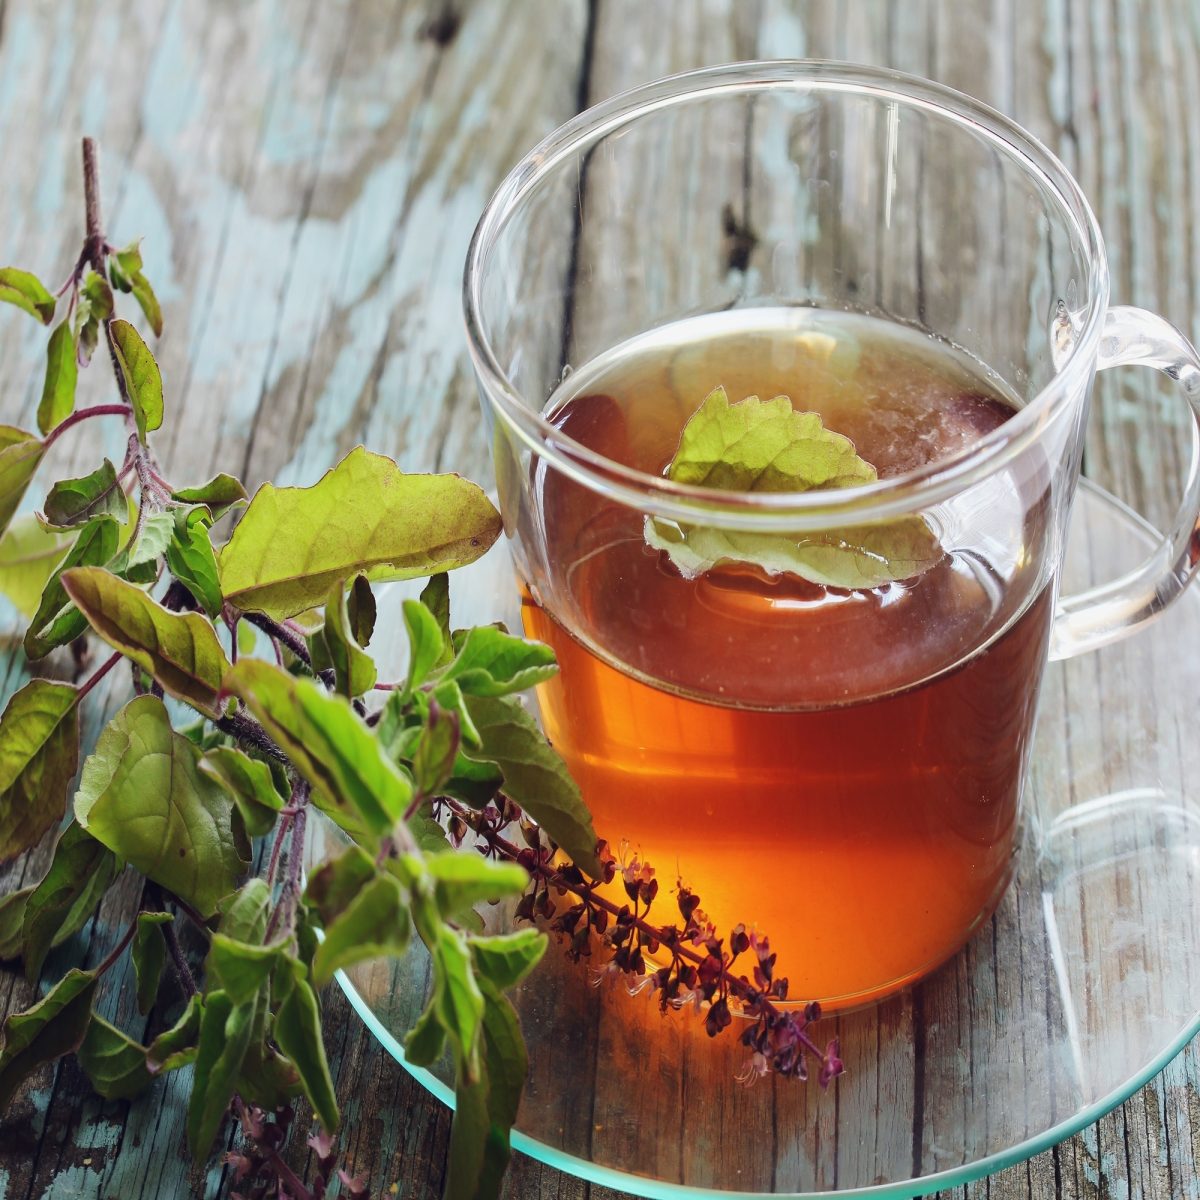 sip a cup of tulsi tea ‘elixir of life’